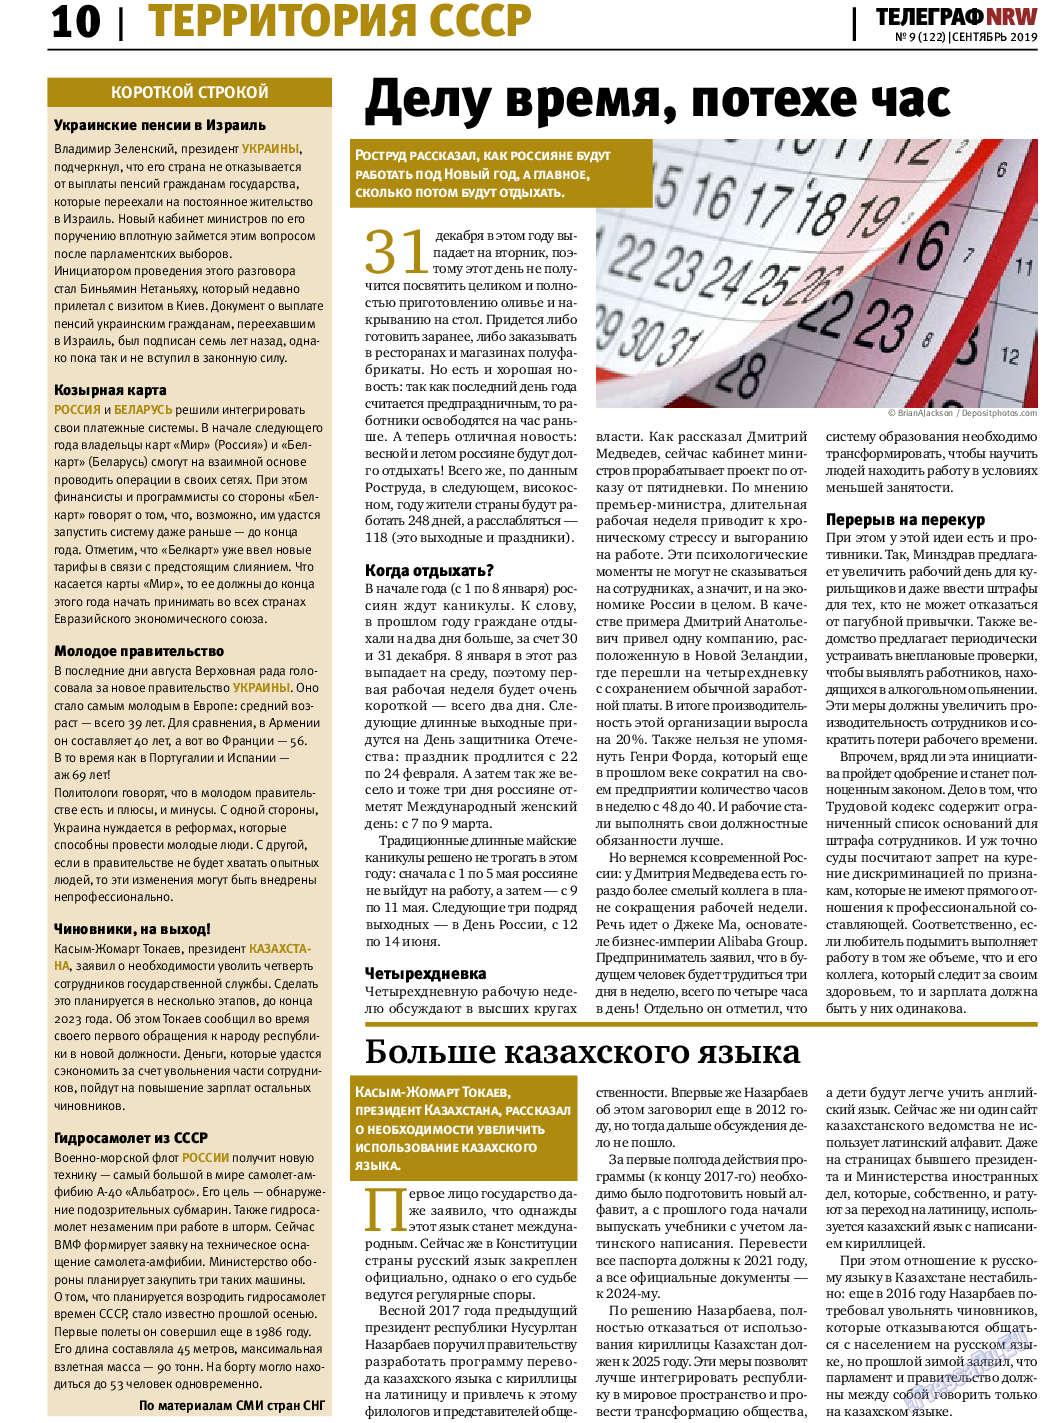 Телеграф NRW, газета. 2019 №9 стр.10